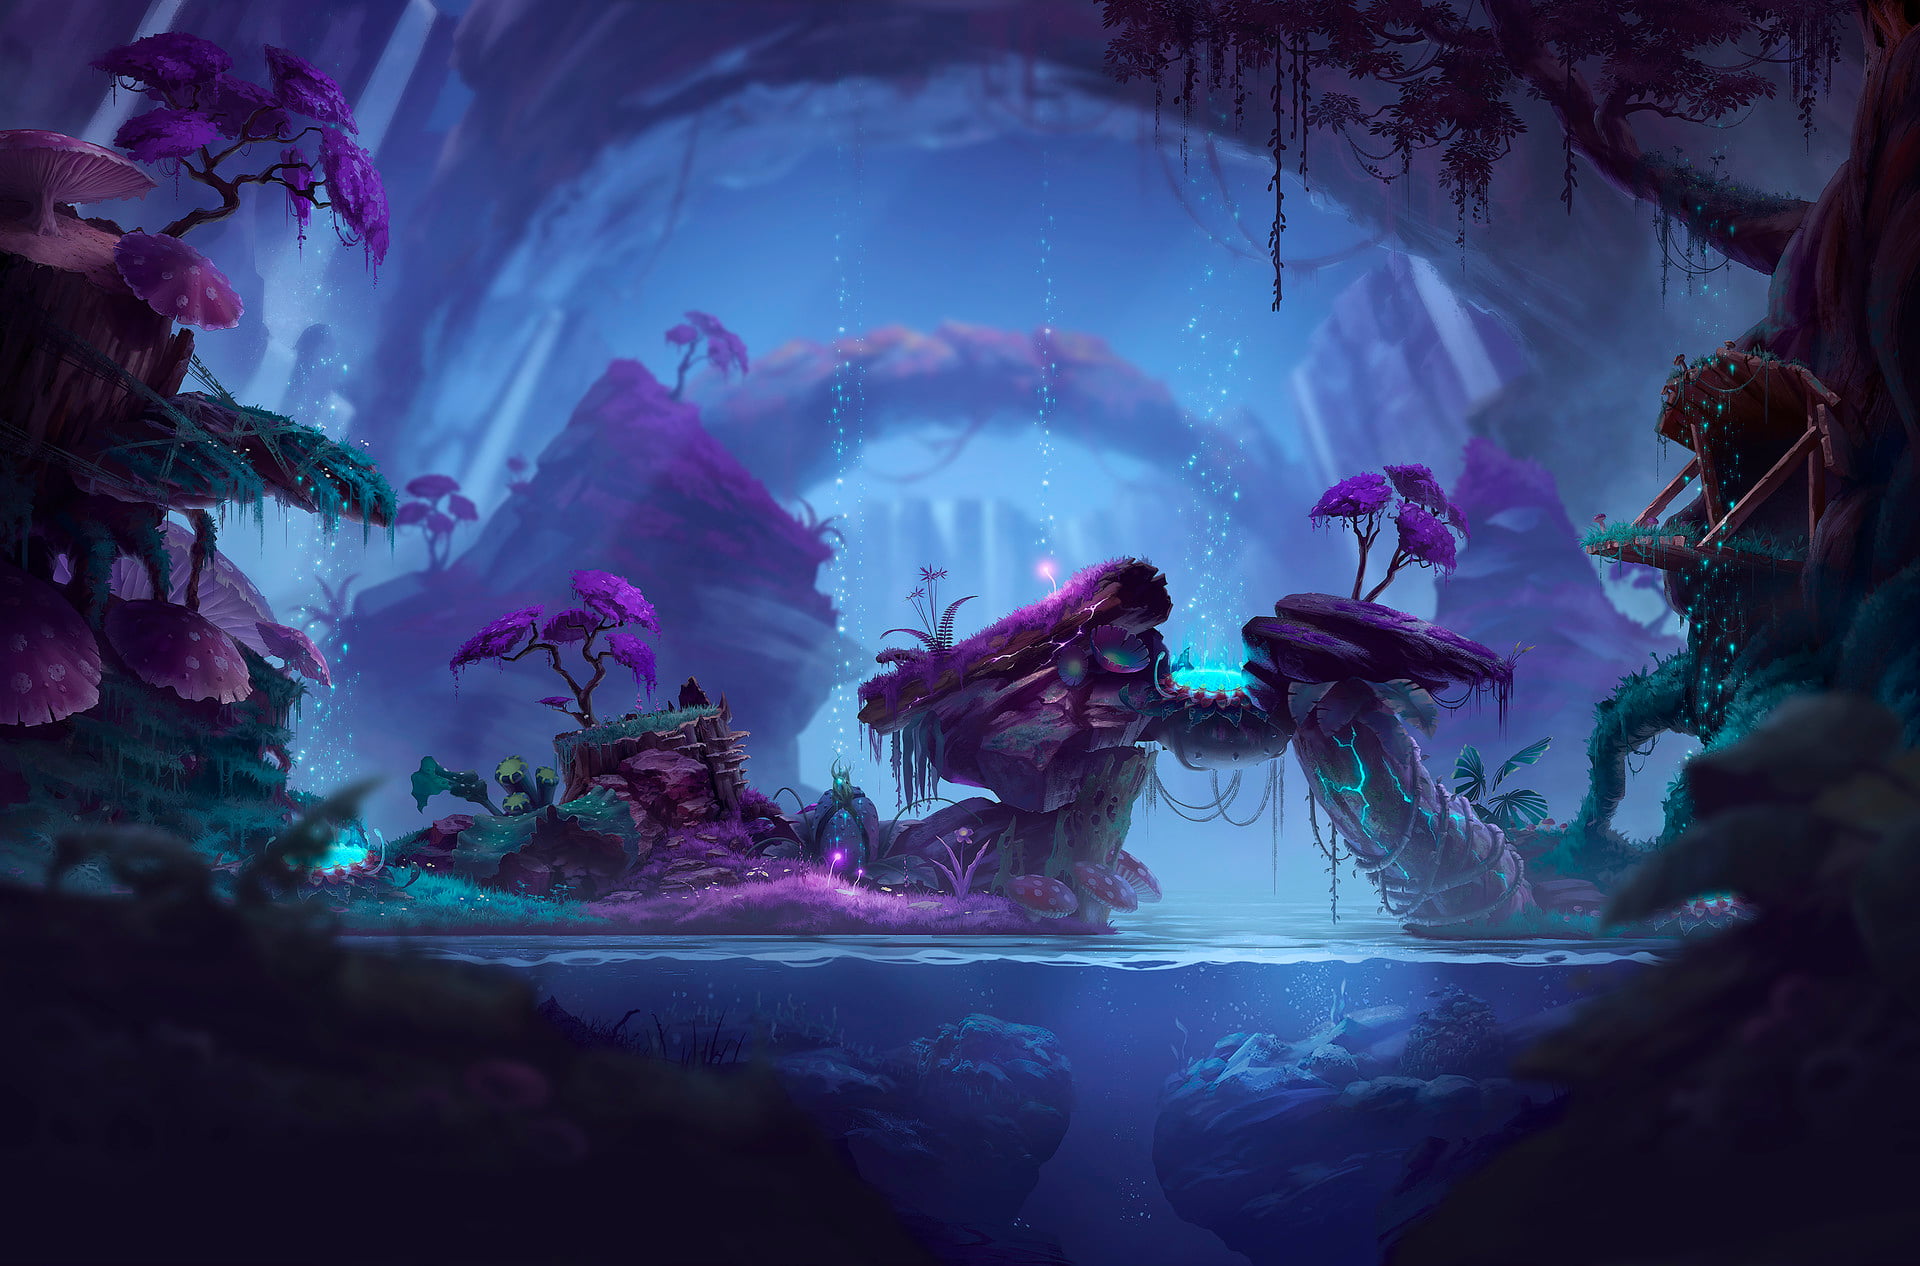 digital painting of pond, artwork, forest, fantasy art